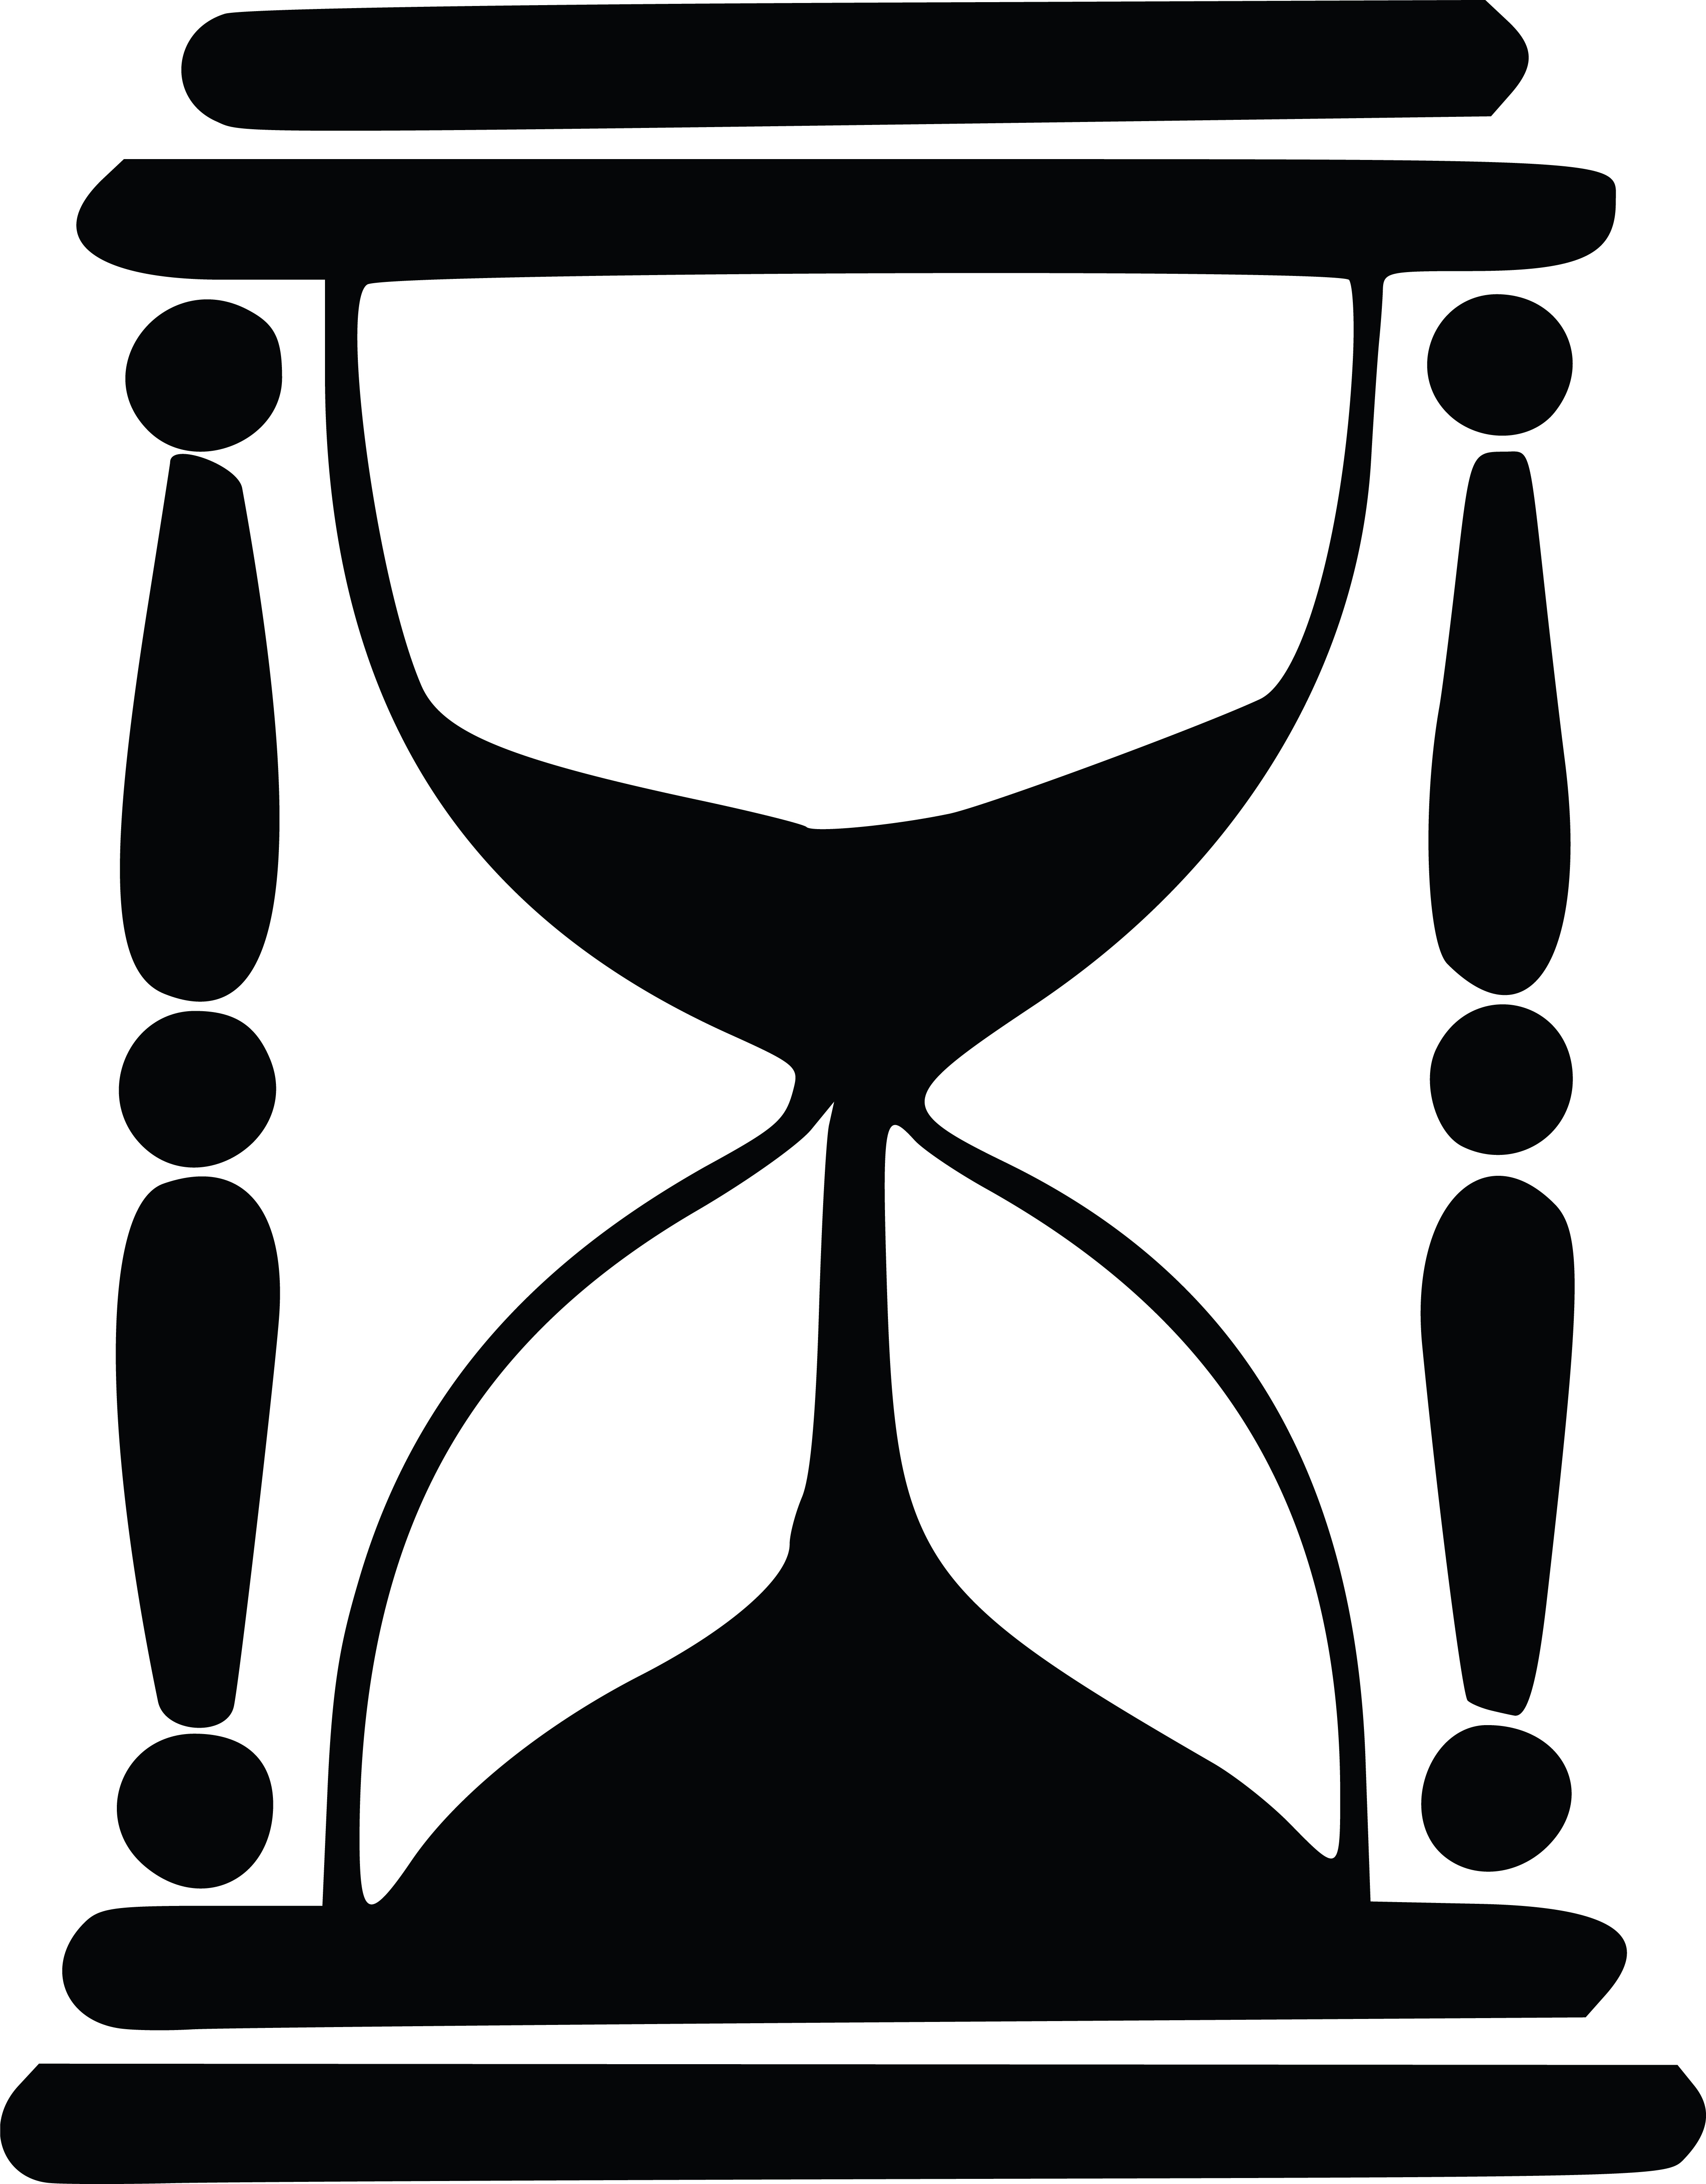 Hourglass clipart empty #4